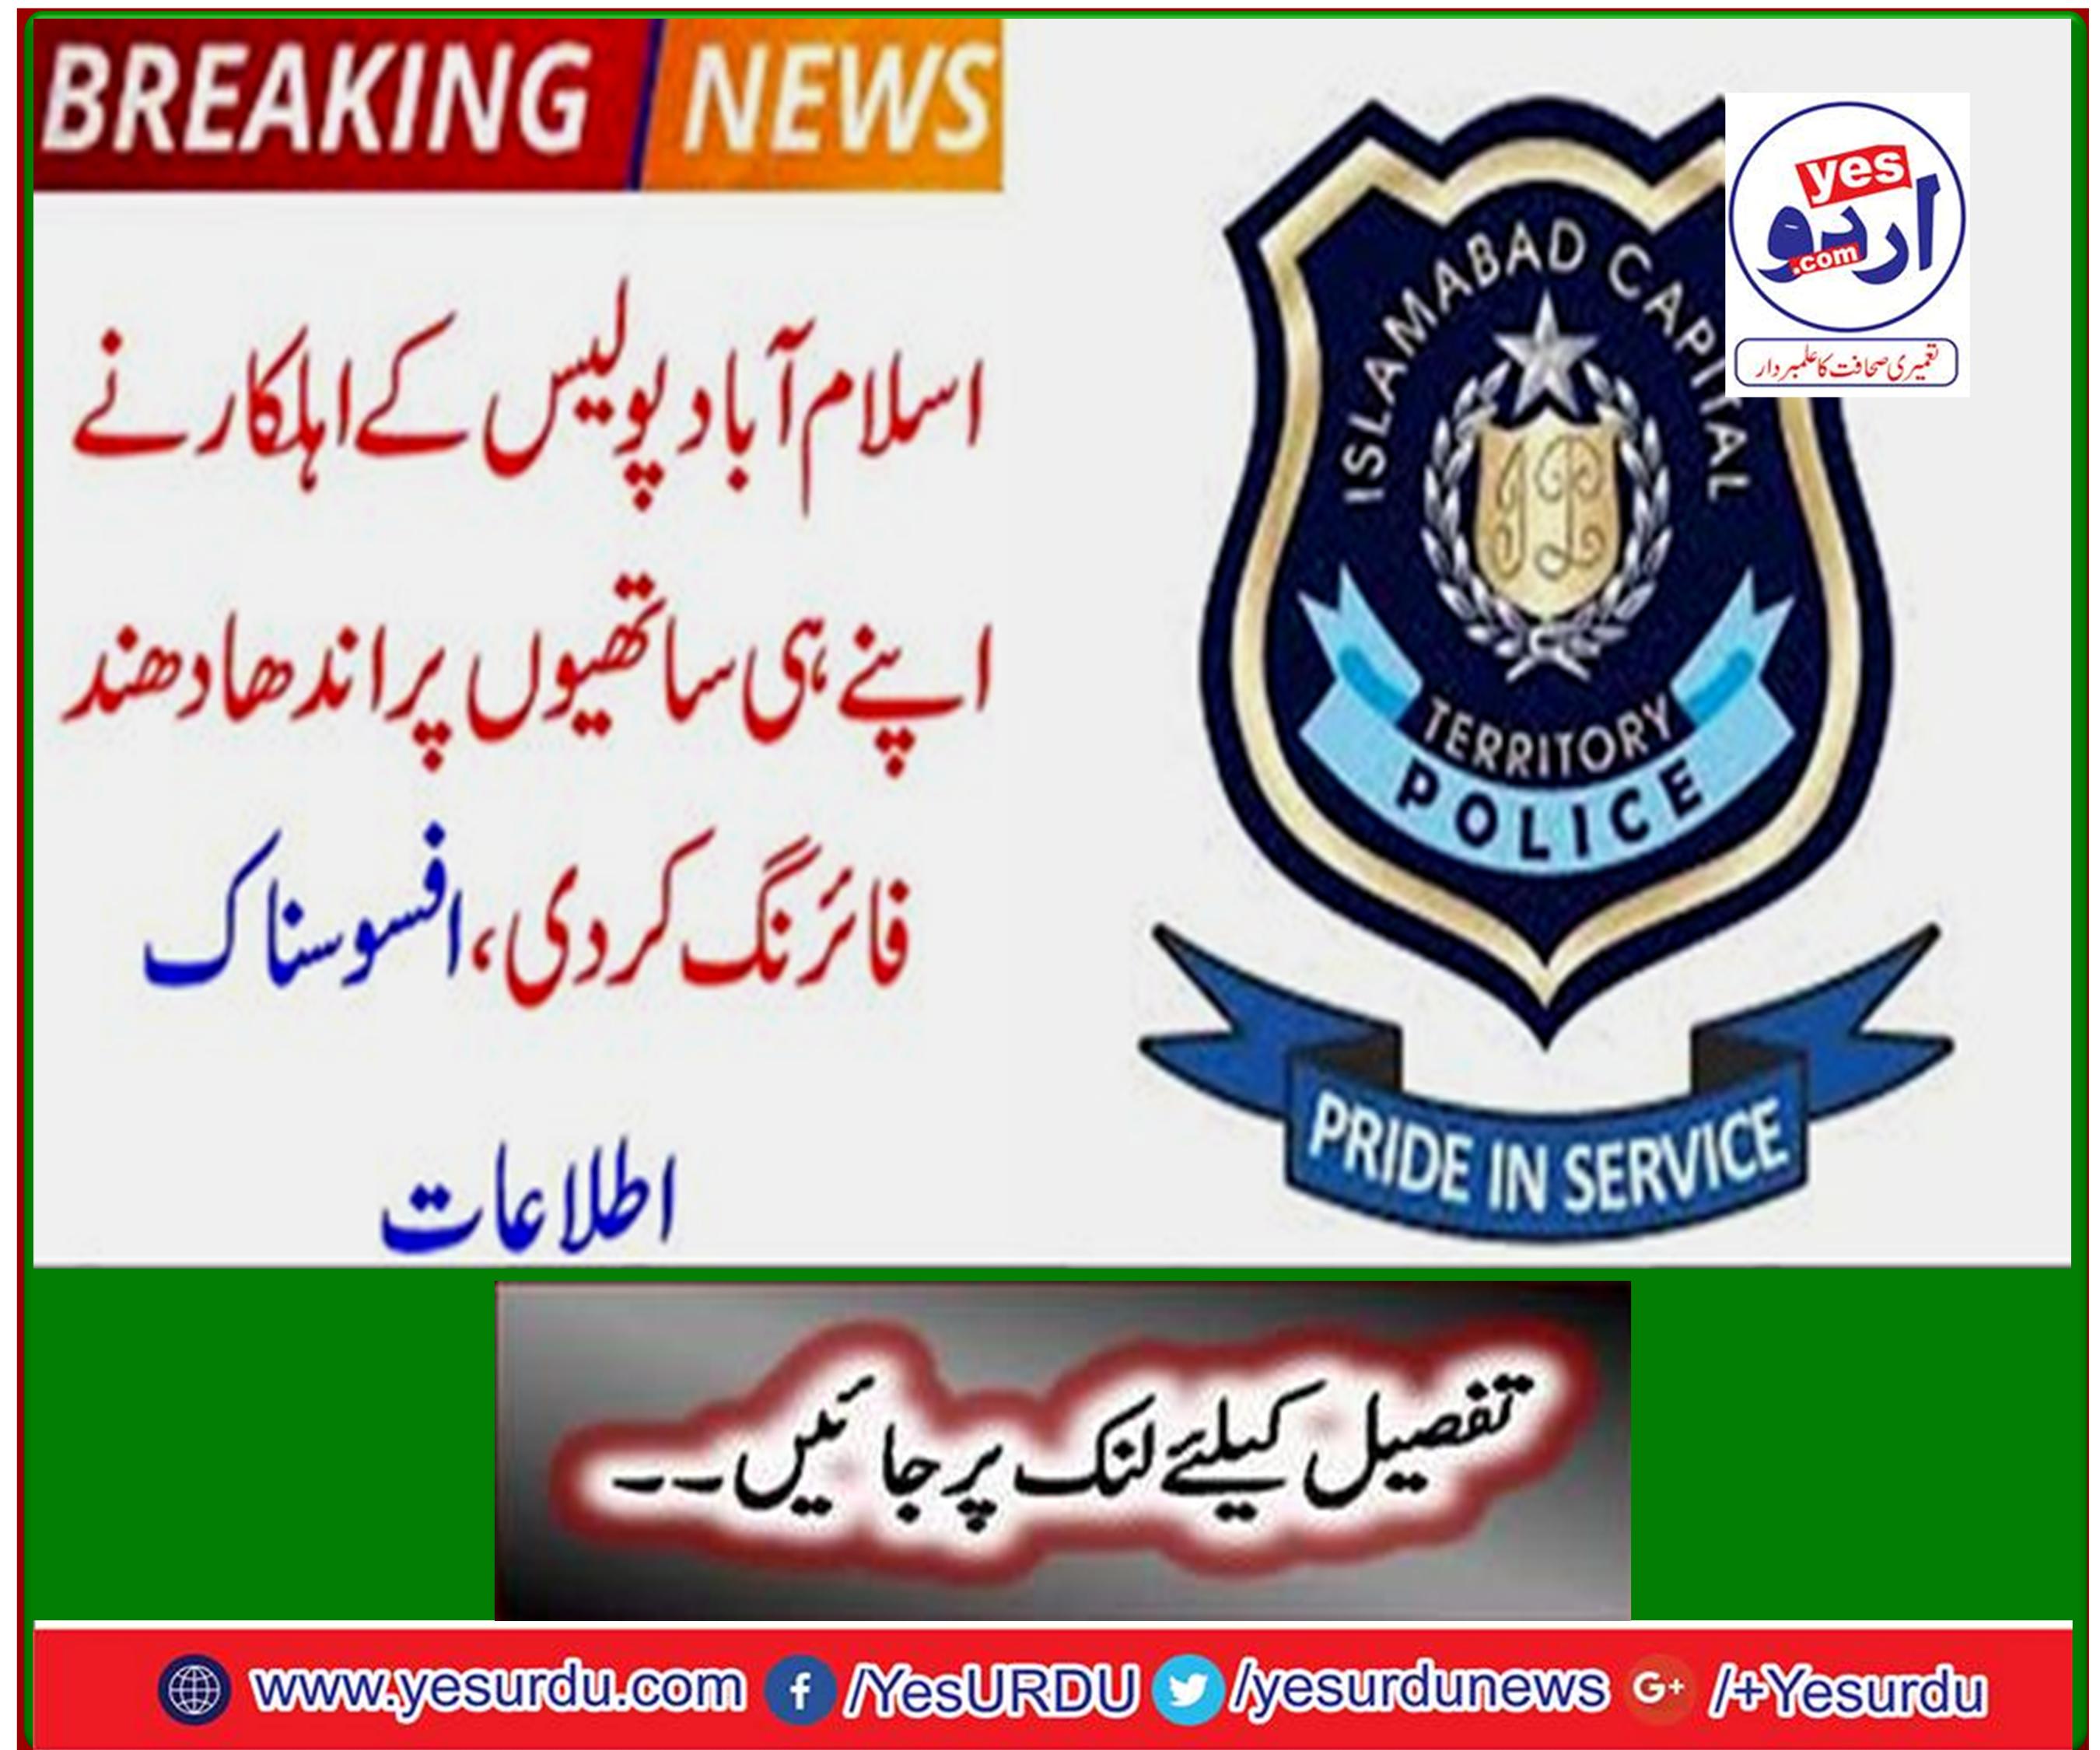 Breaking News: Islamabad policeman shooting indiscriminately at his associates, tragic information